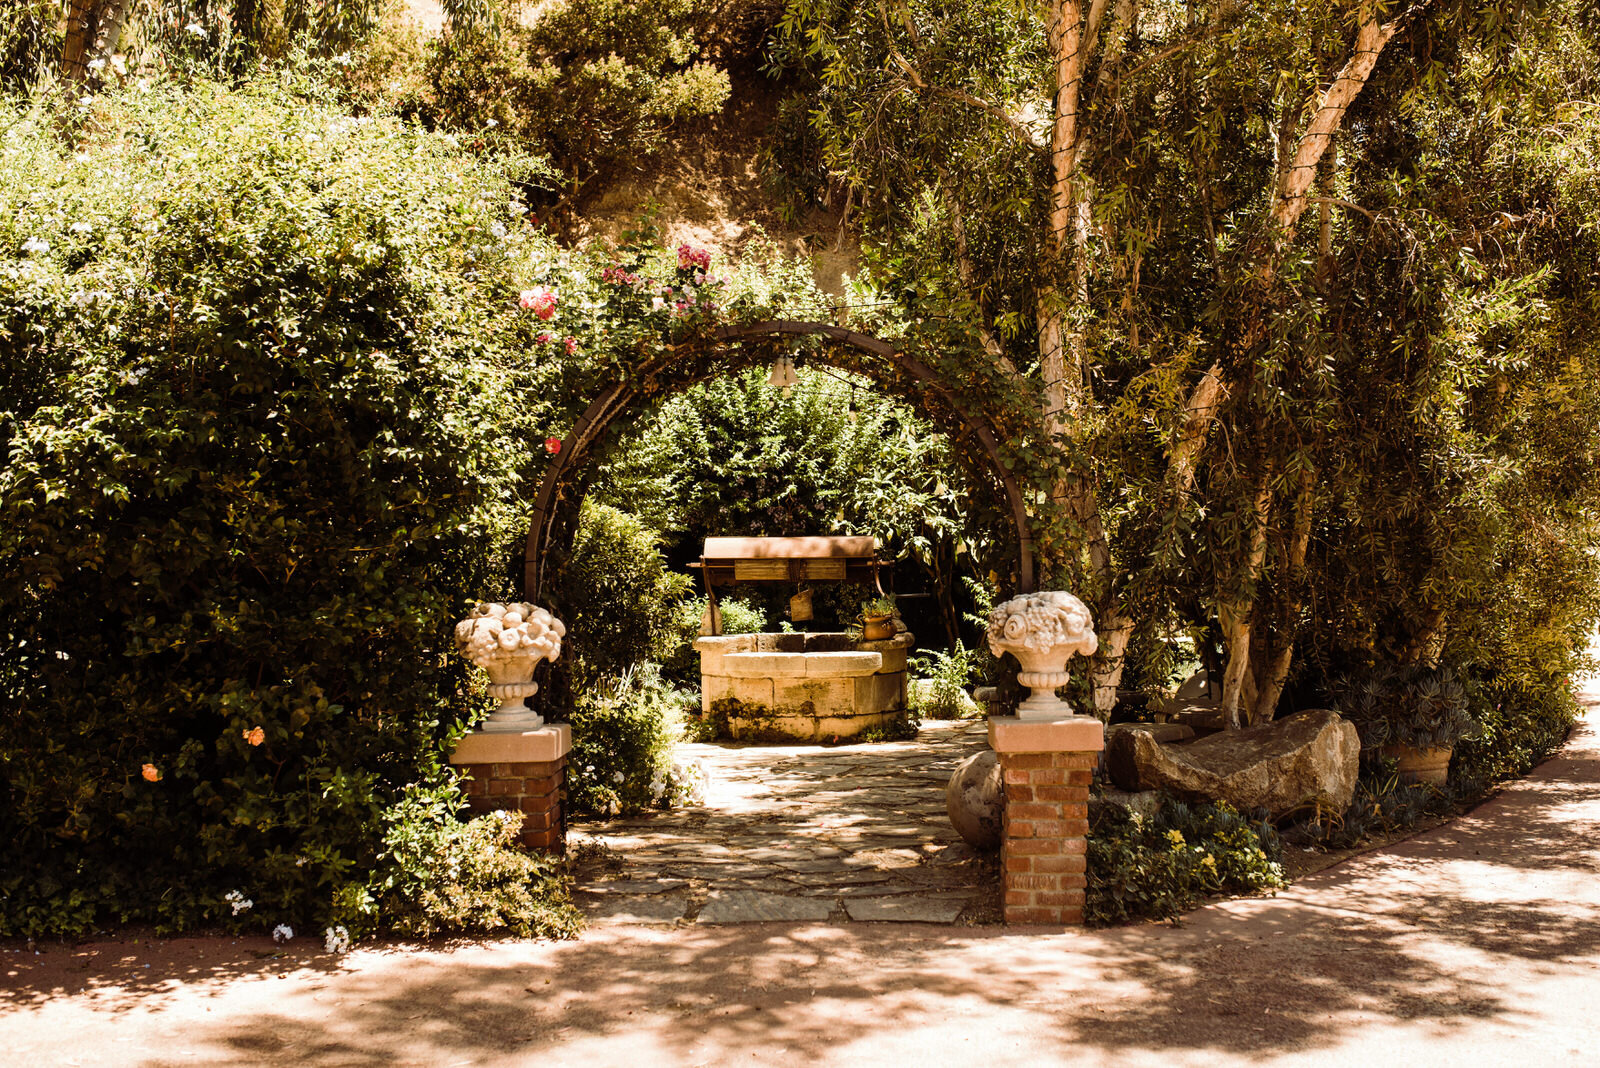 Lush Greenery at Southern California Garden Wedding Venue - The Houdini Estate | Photos by Kept Record | www.keptrecord.com